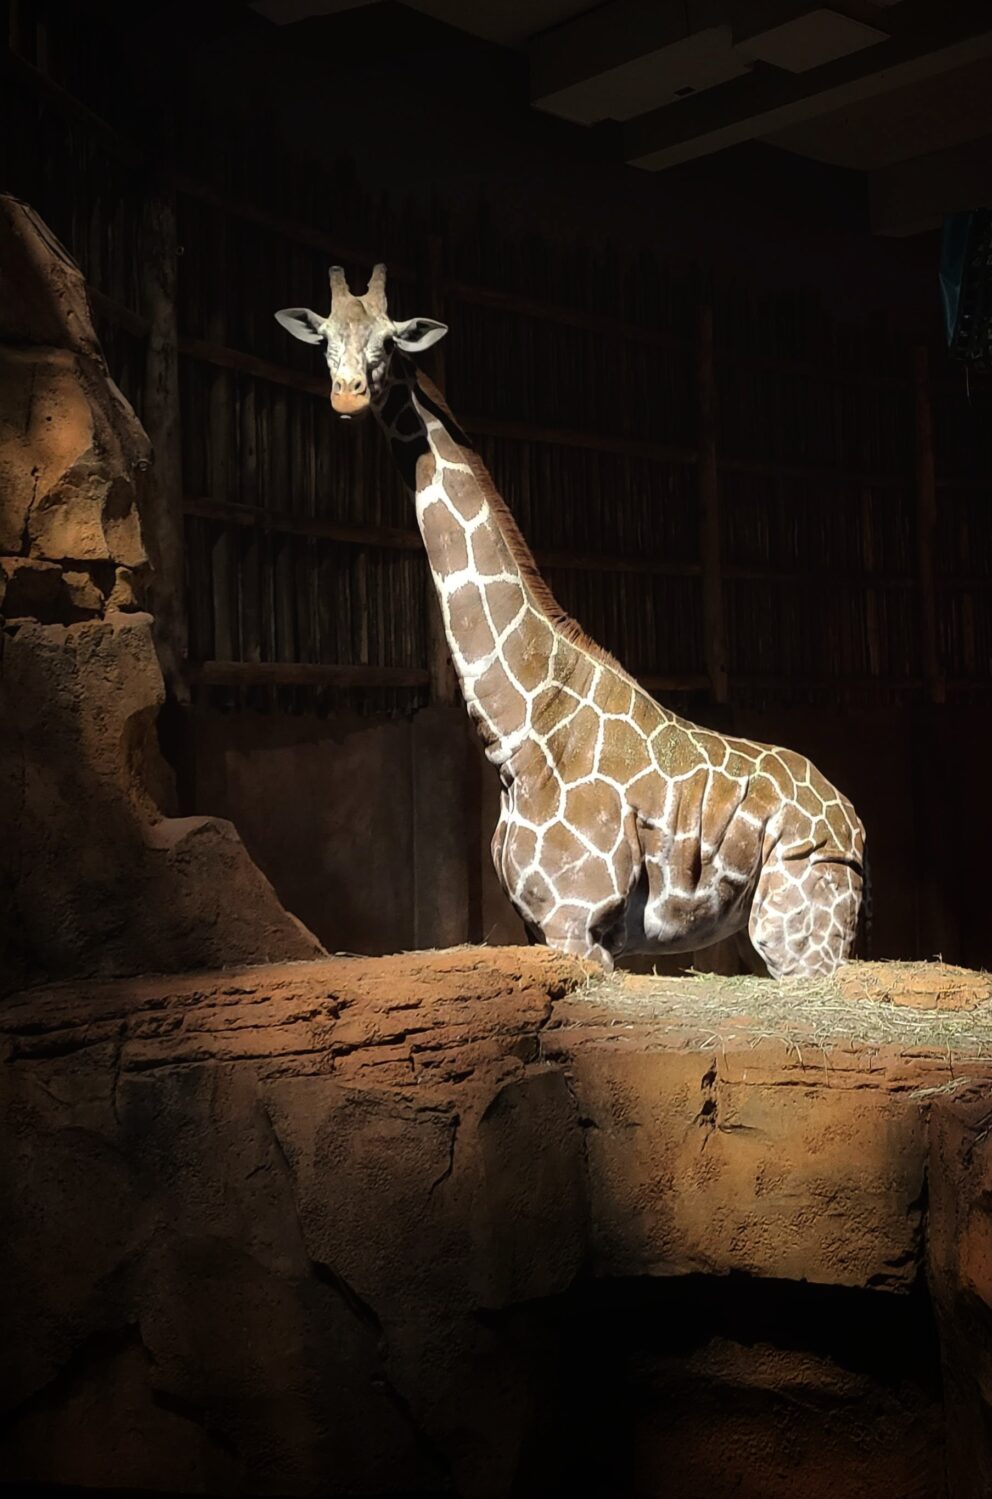 image of giraffe with dark background